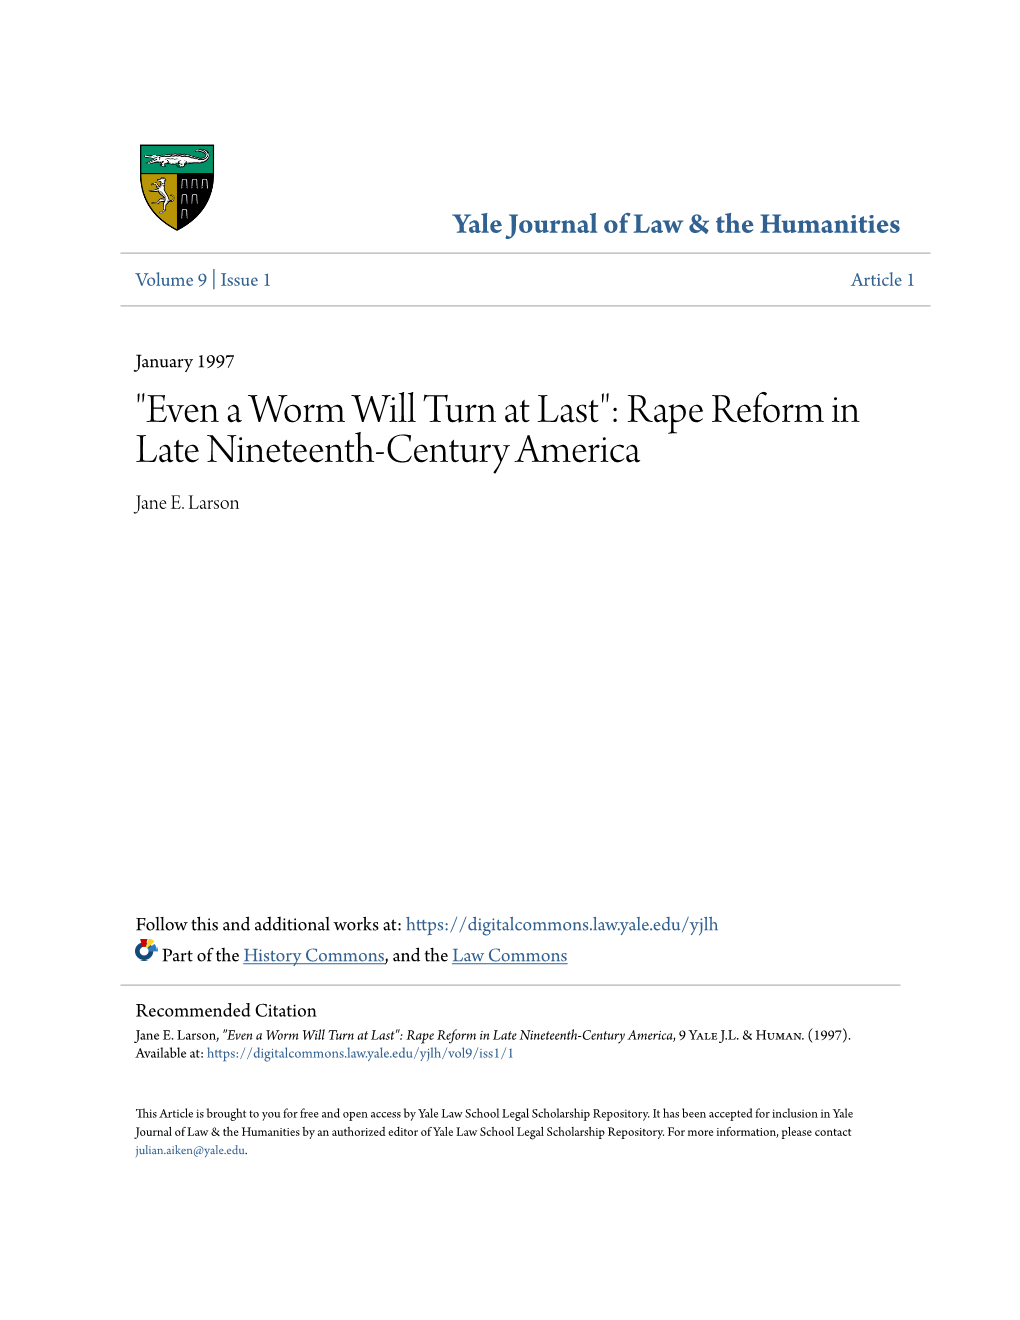 Rape Reform in Late Nineteenth-Century America Jane E